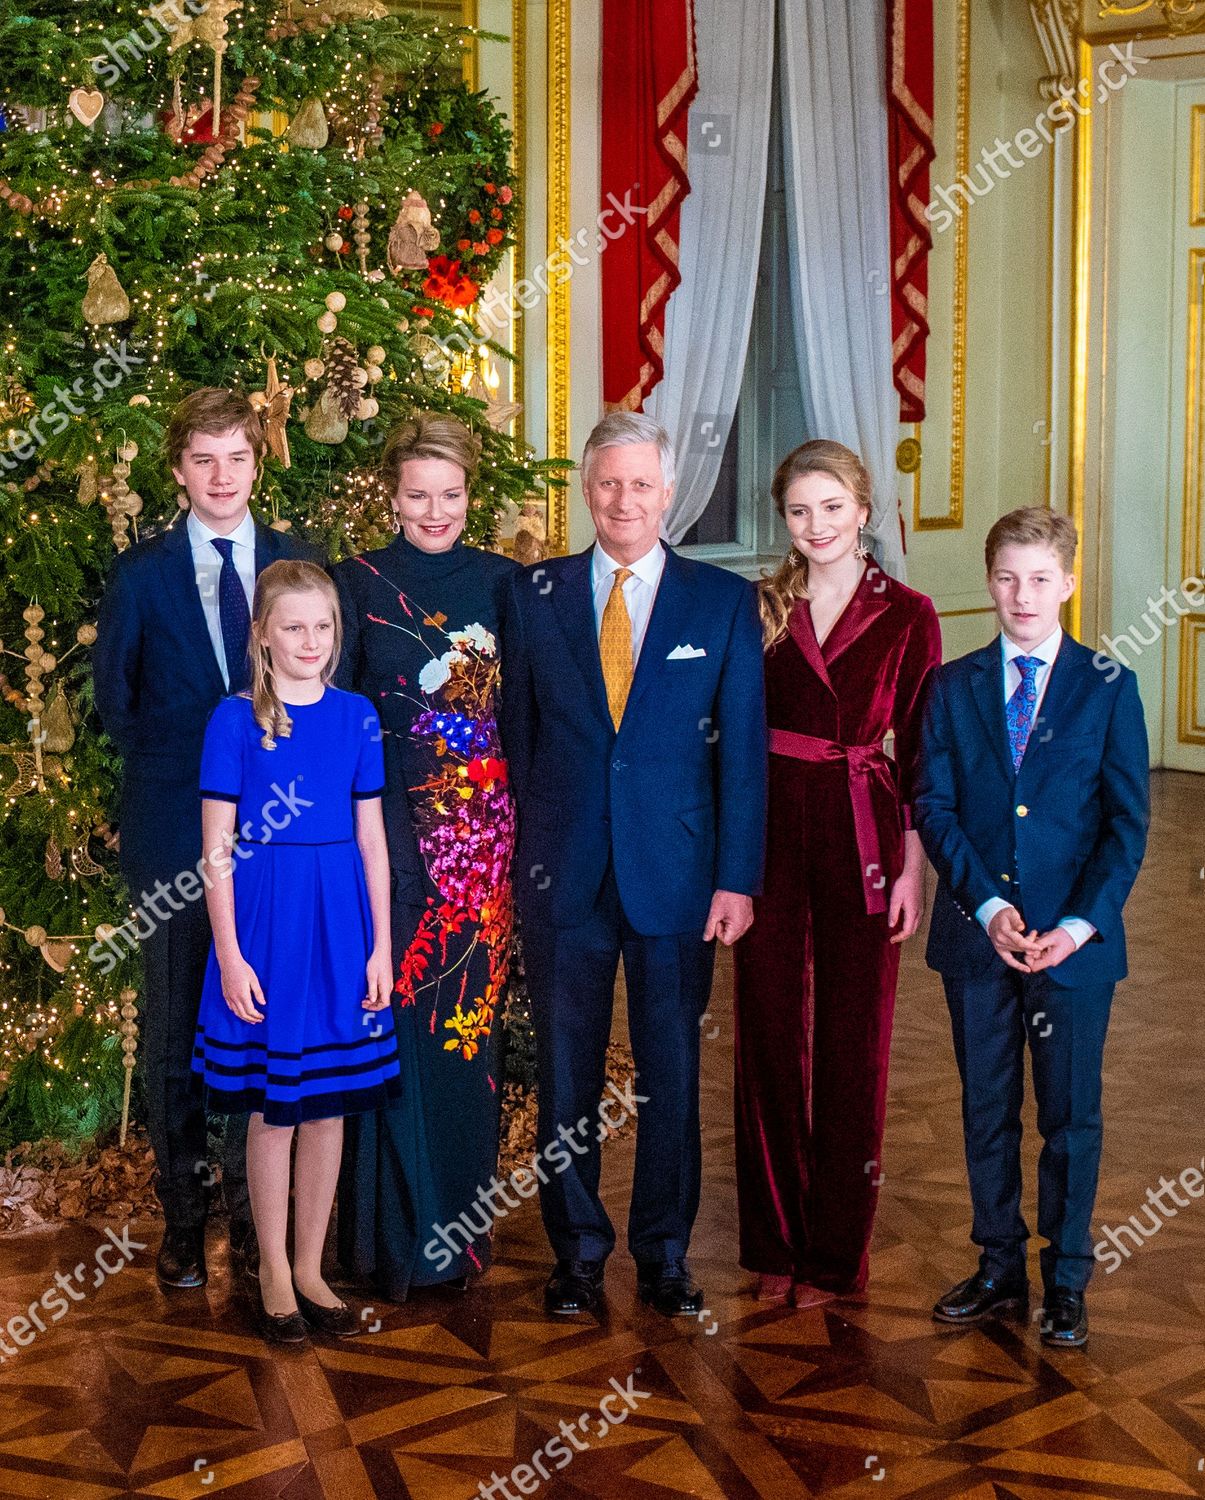 belgian-royals-attend-christmas-concert-brussels-belgium-shutterstock-editorial-10508940c.jpg